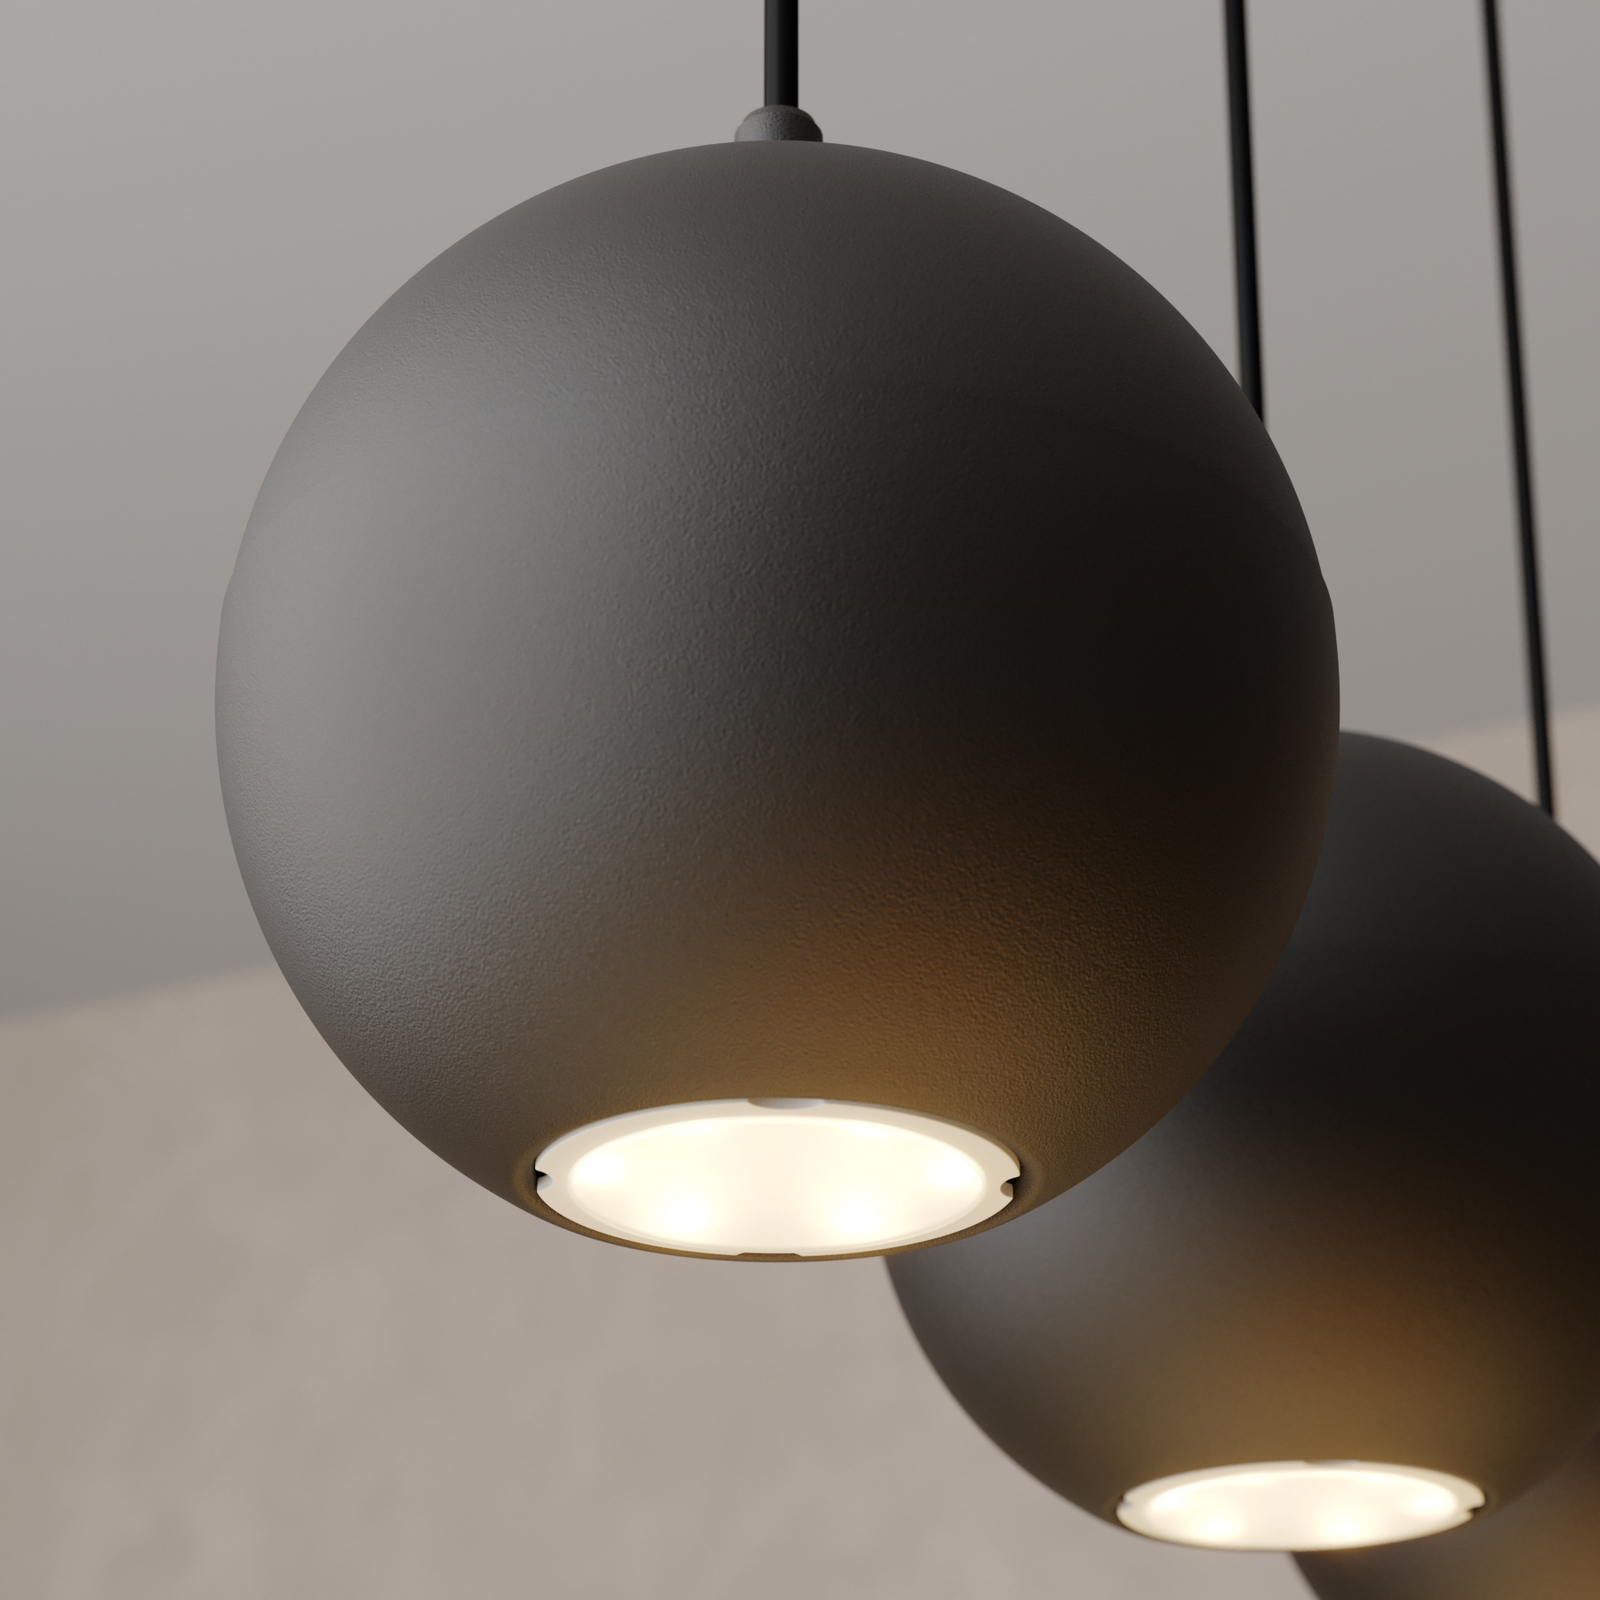 Midnight pendant light in black 4-bulb long